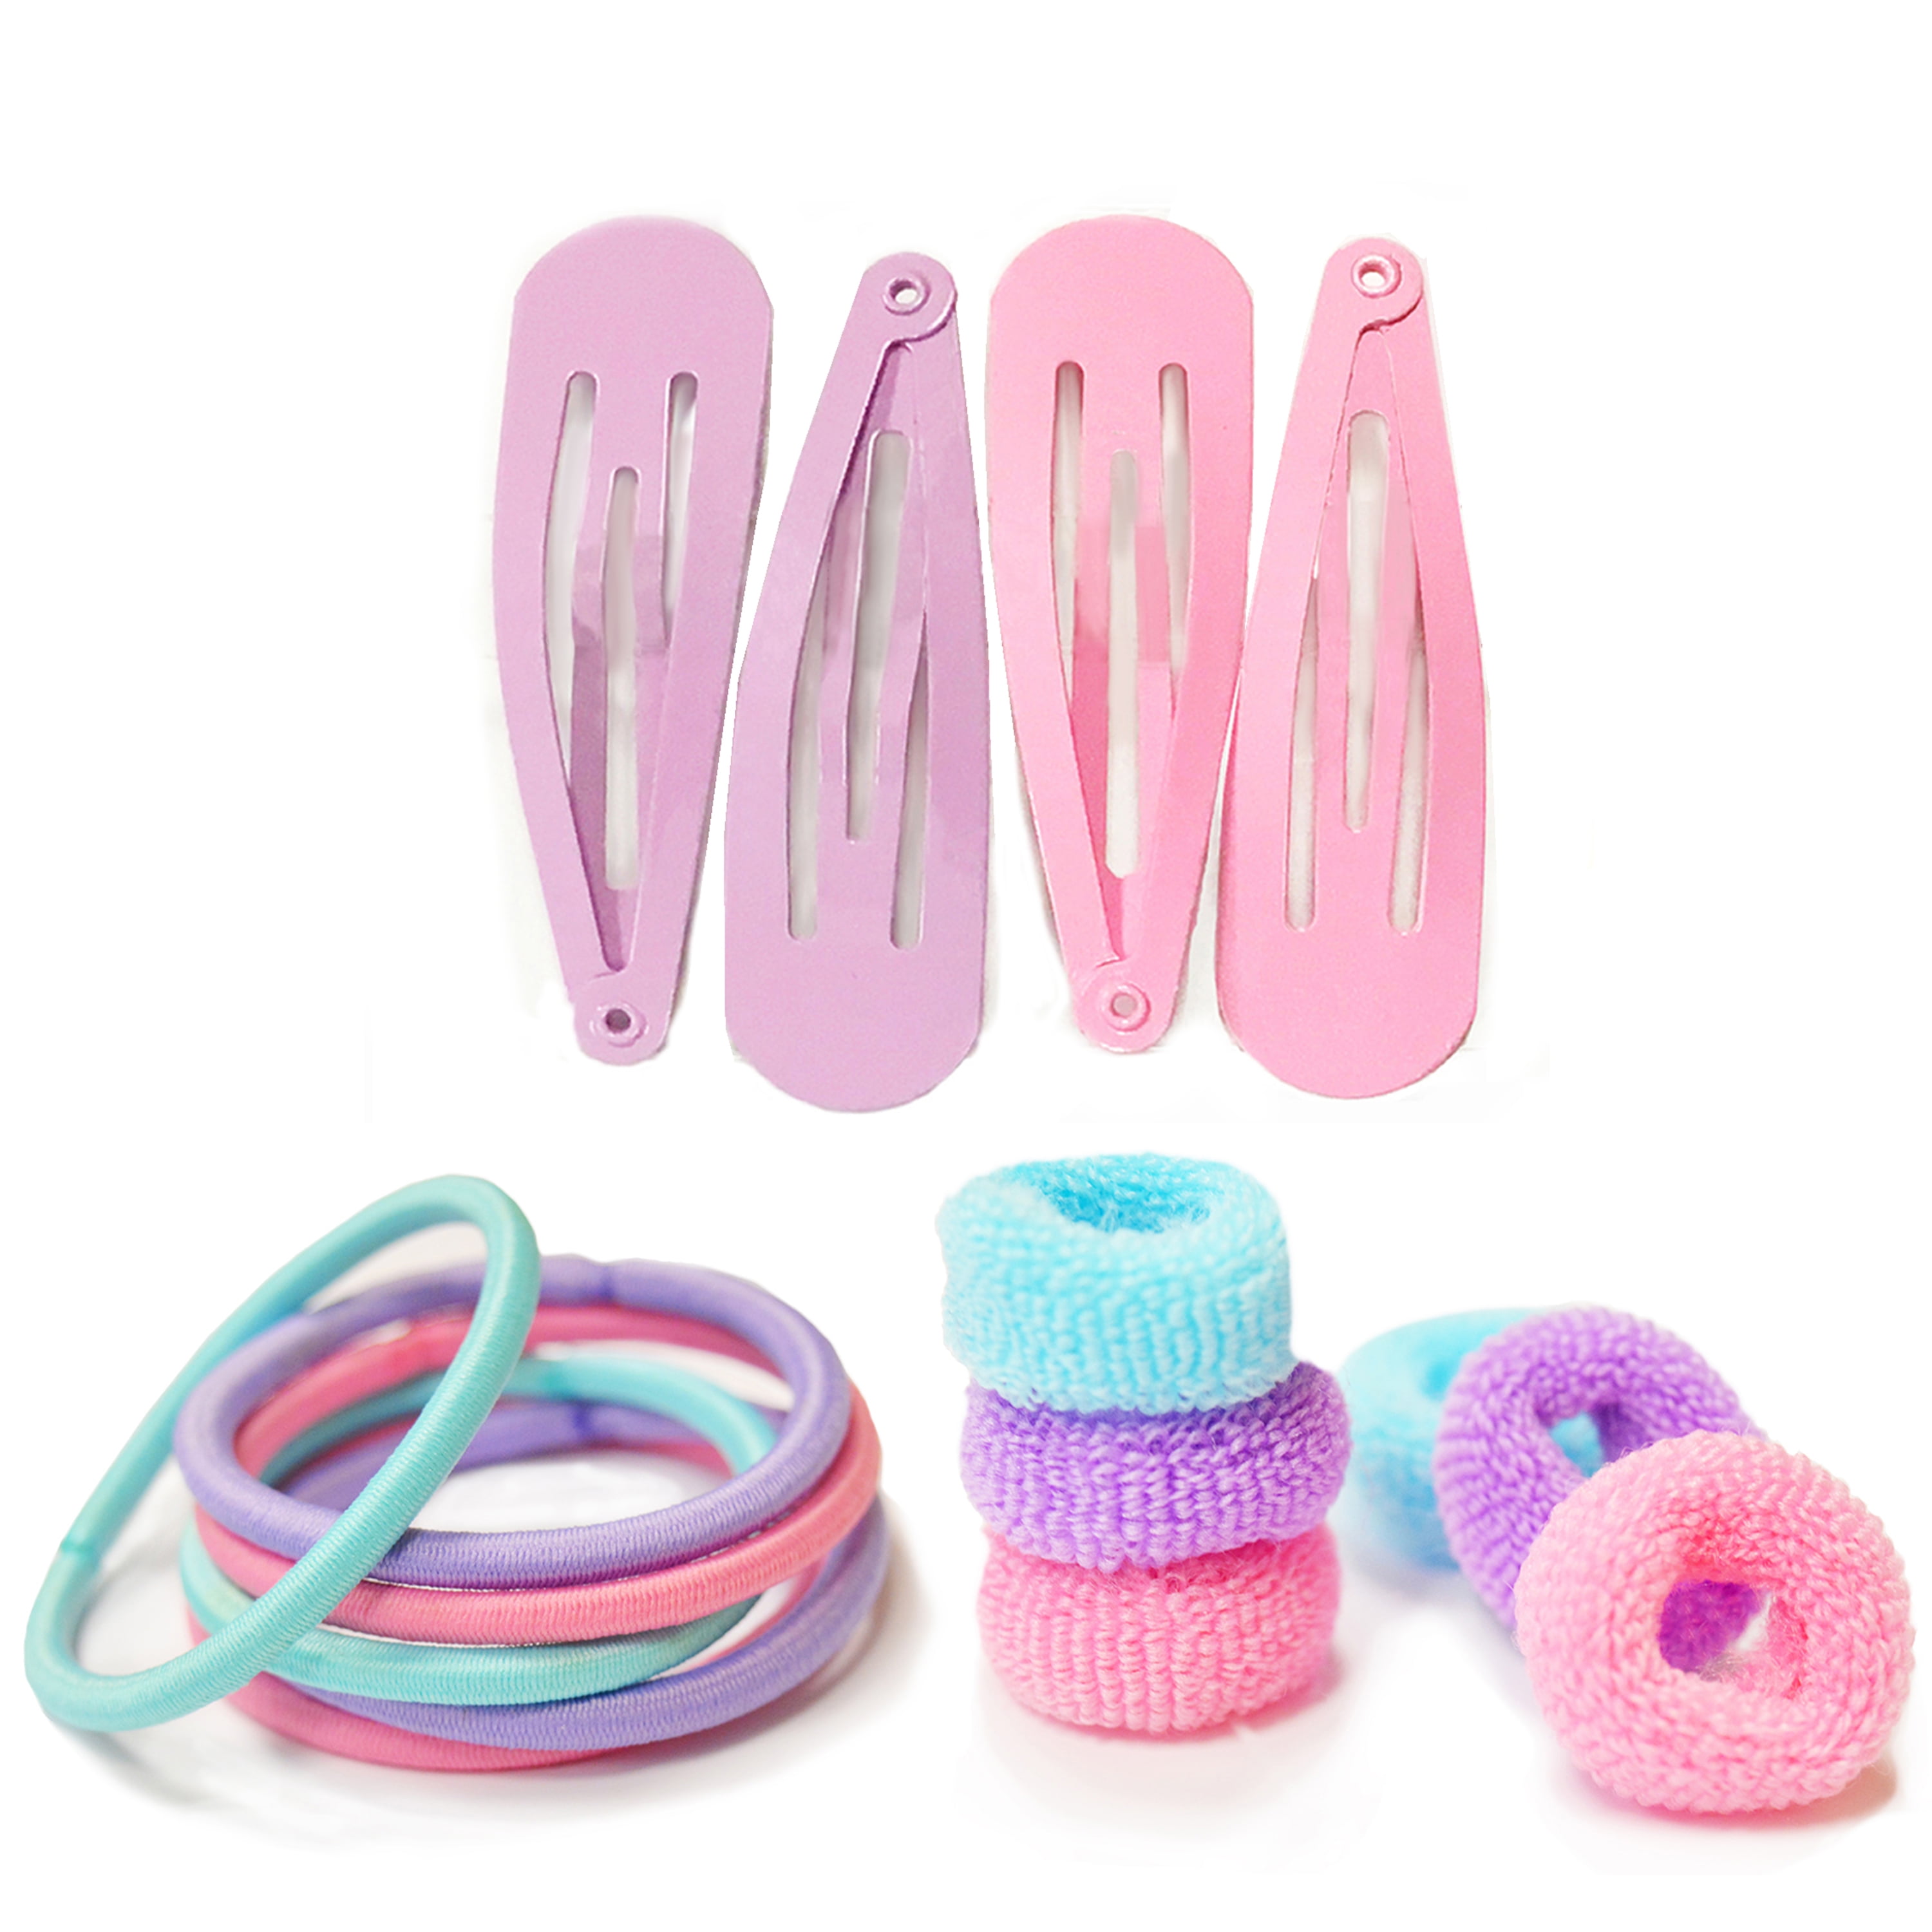 Daisy Elastic Hair Ring Rope Bands Hair Clips Ponytail Holder For Girl Kids Baby